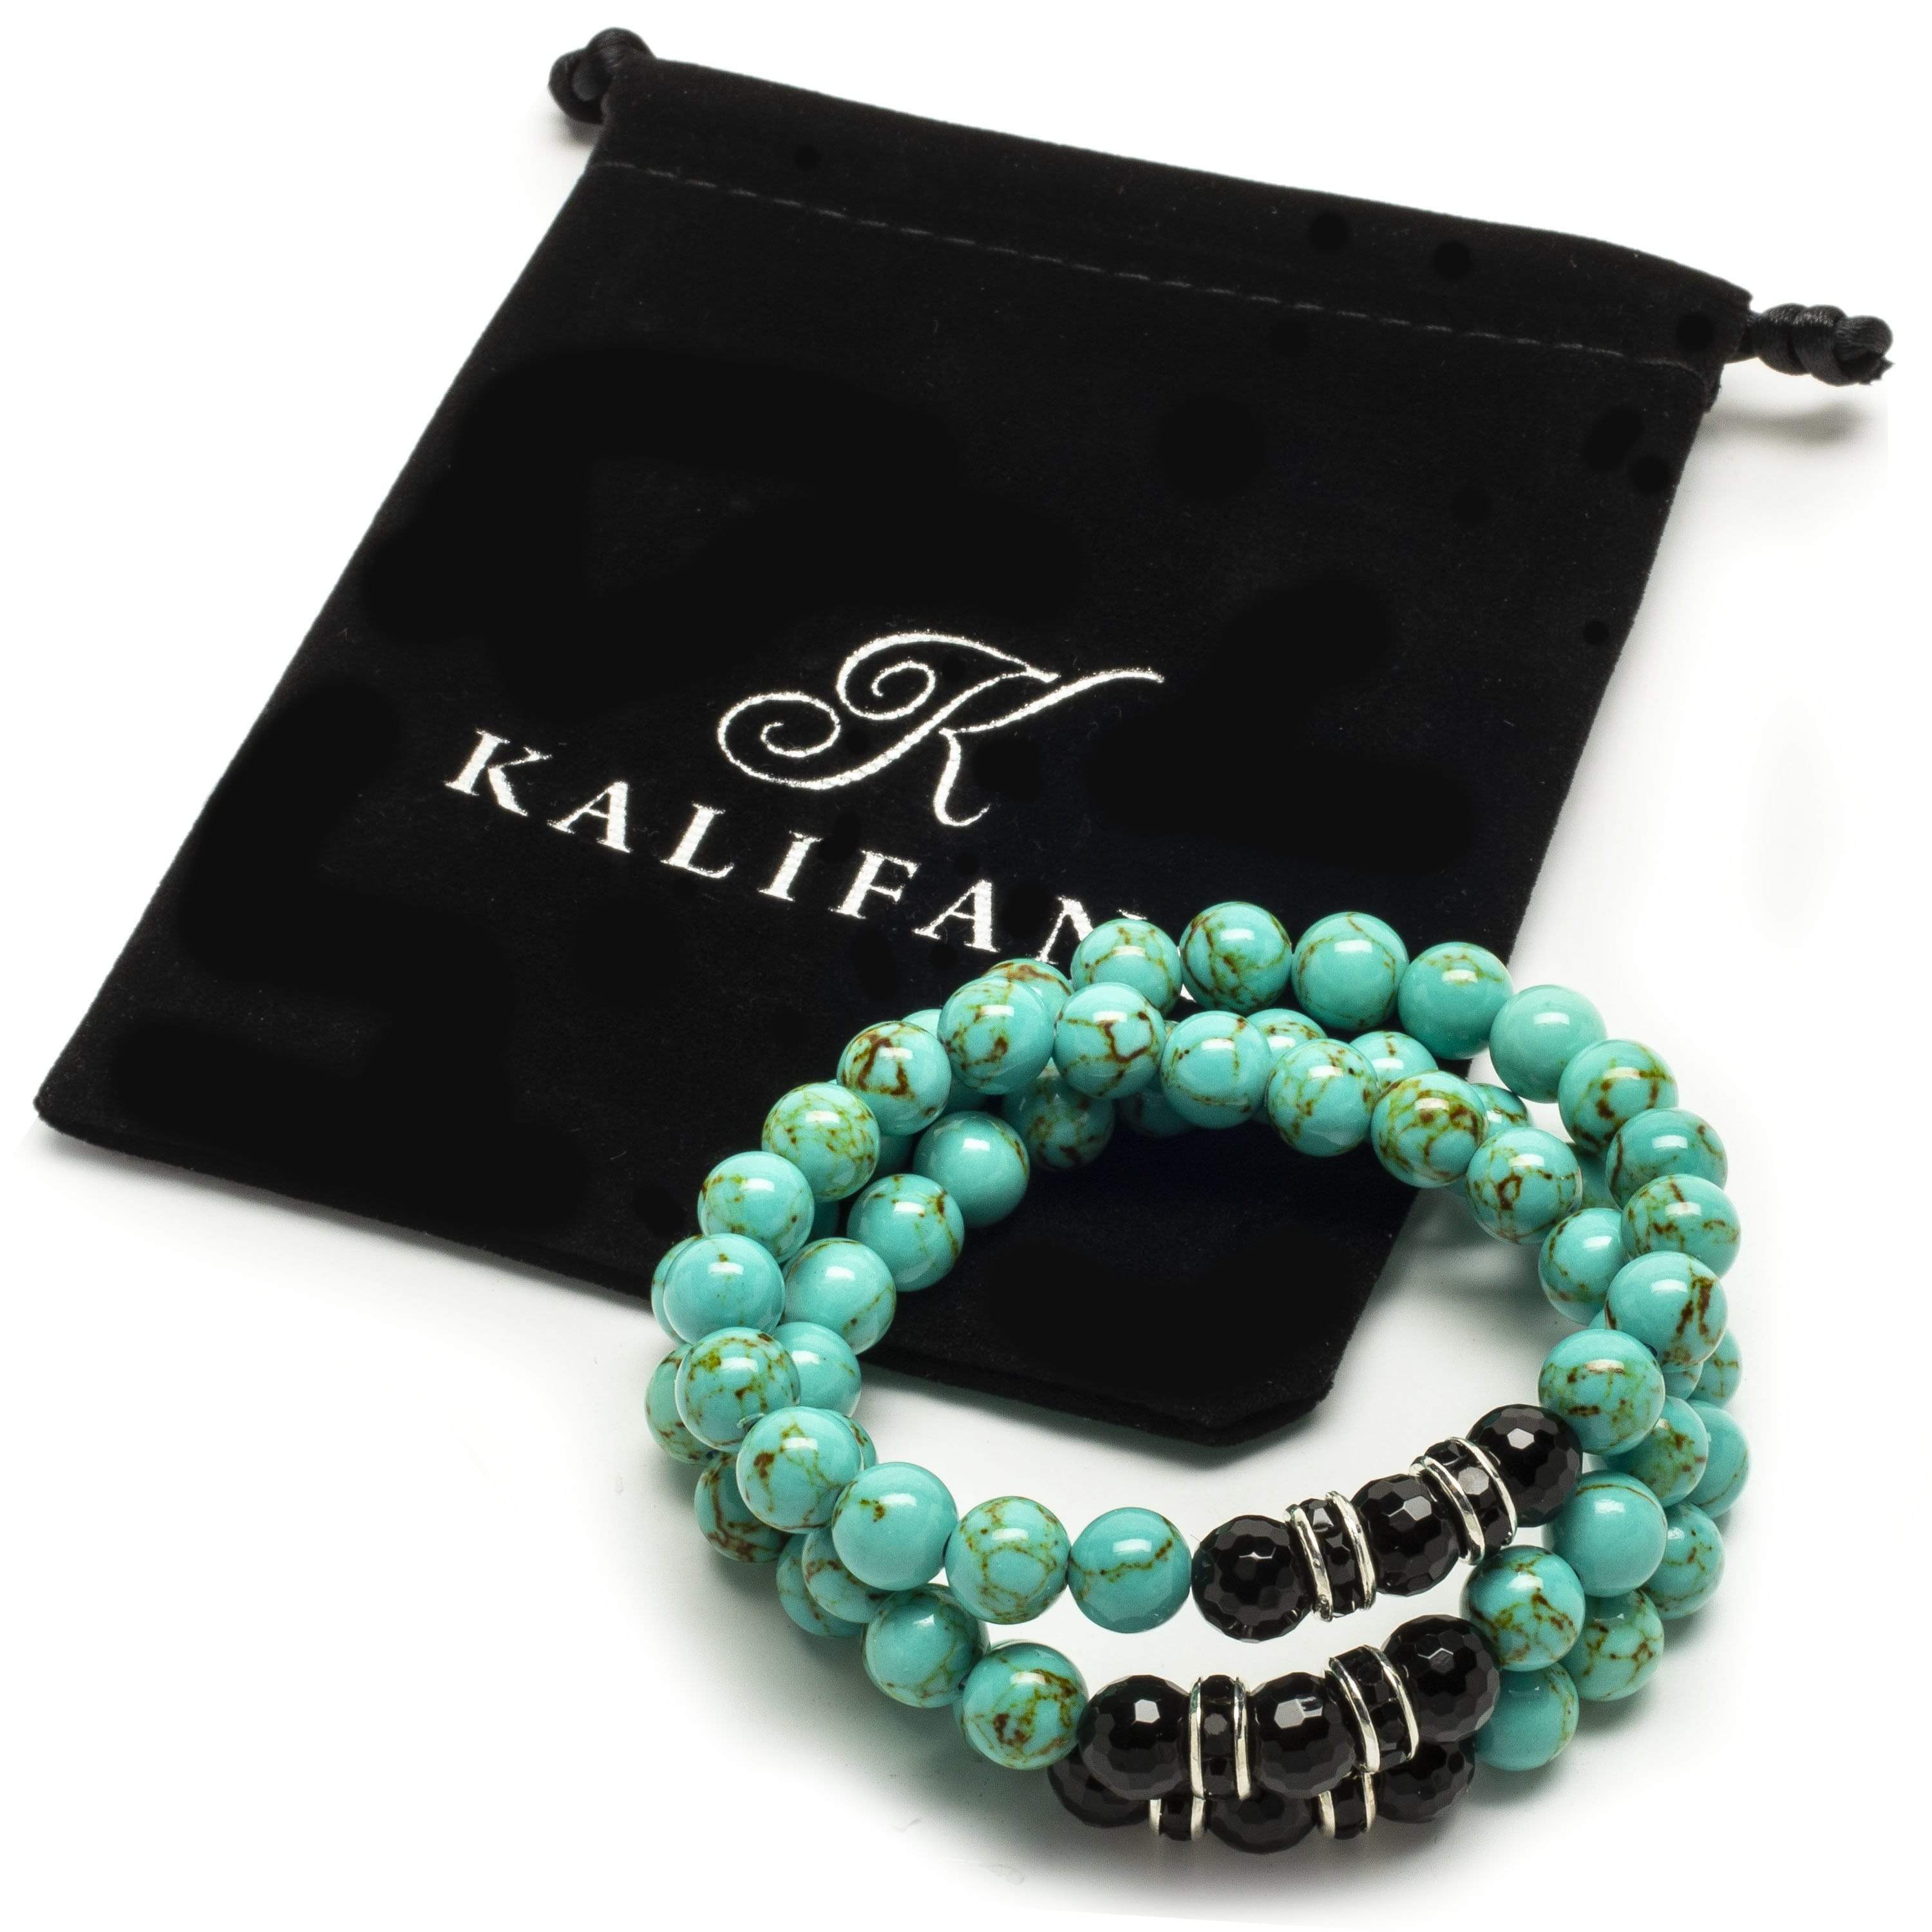 Kalifano Gemstone Bracelets Howlite Turquoise 8mm Beads with Black Agate and Black & Silver Accent Beads Triple Wrap Elastic Gemstone Bracelet WHITE-BGI3-066